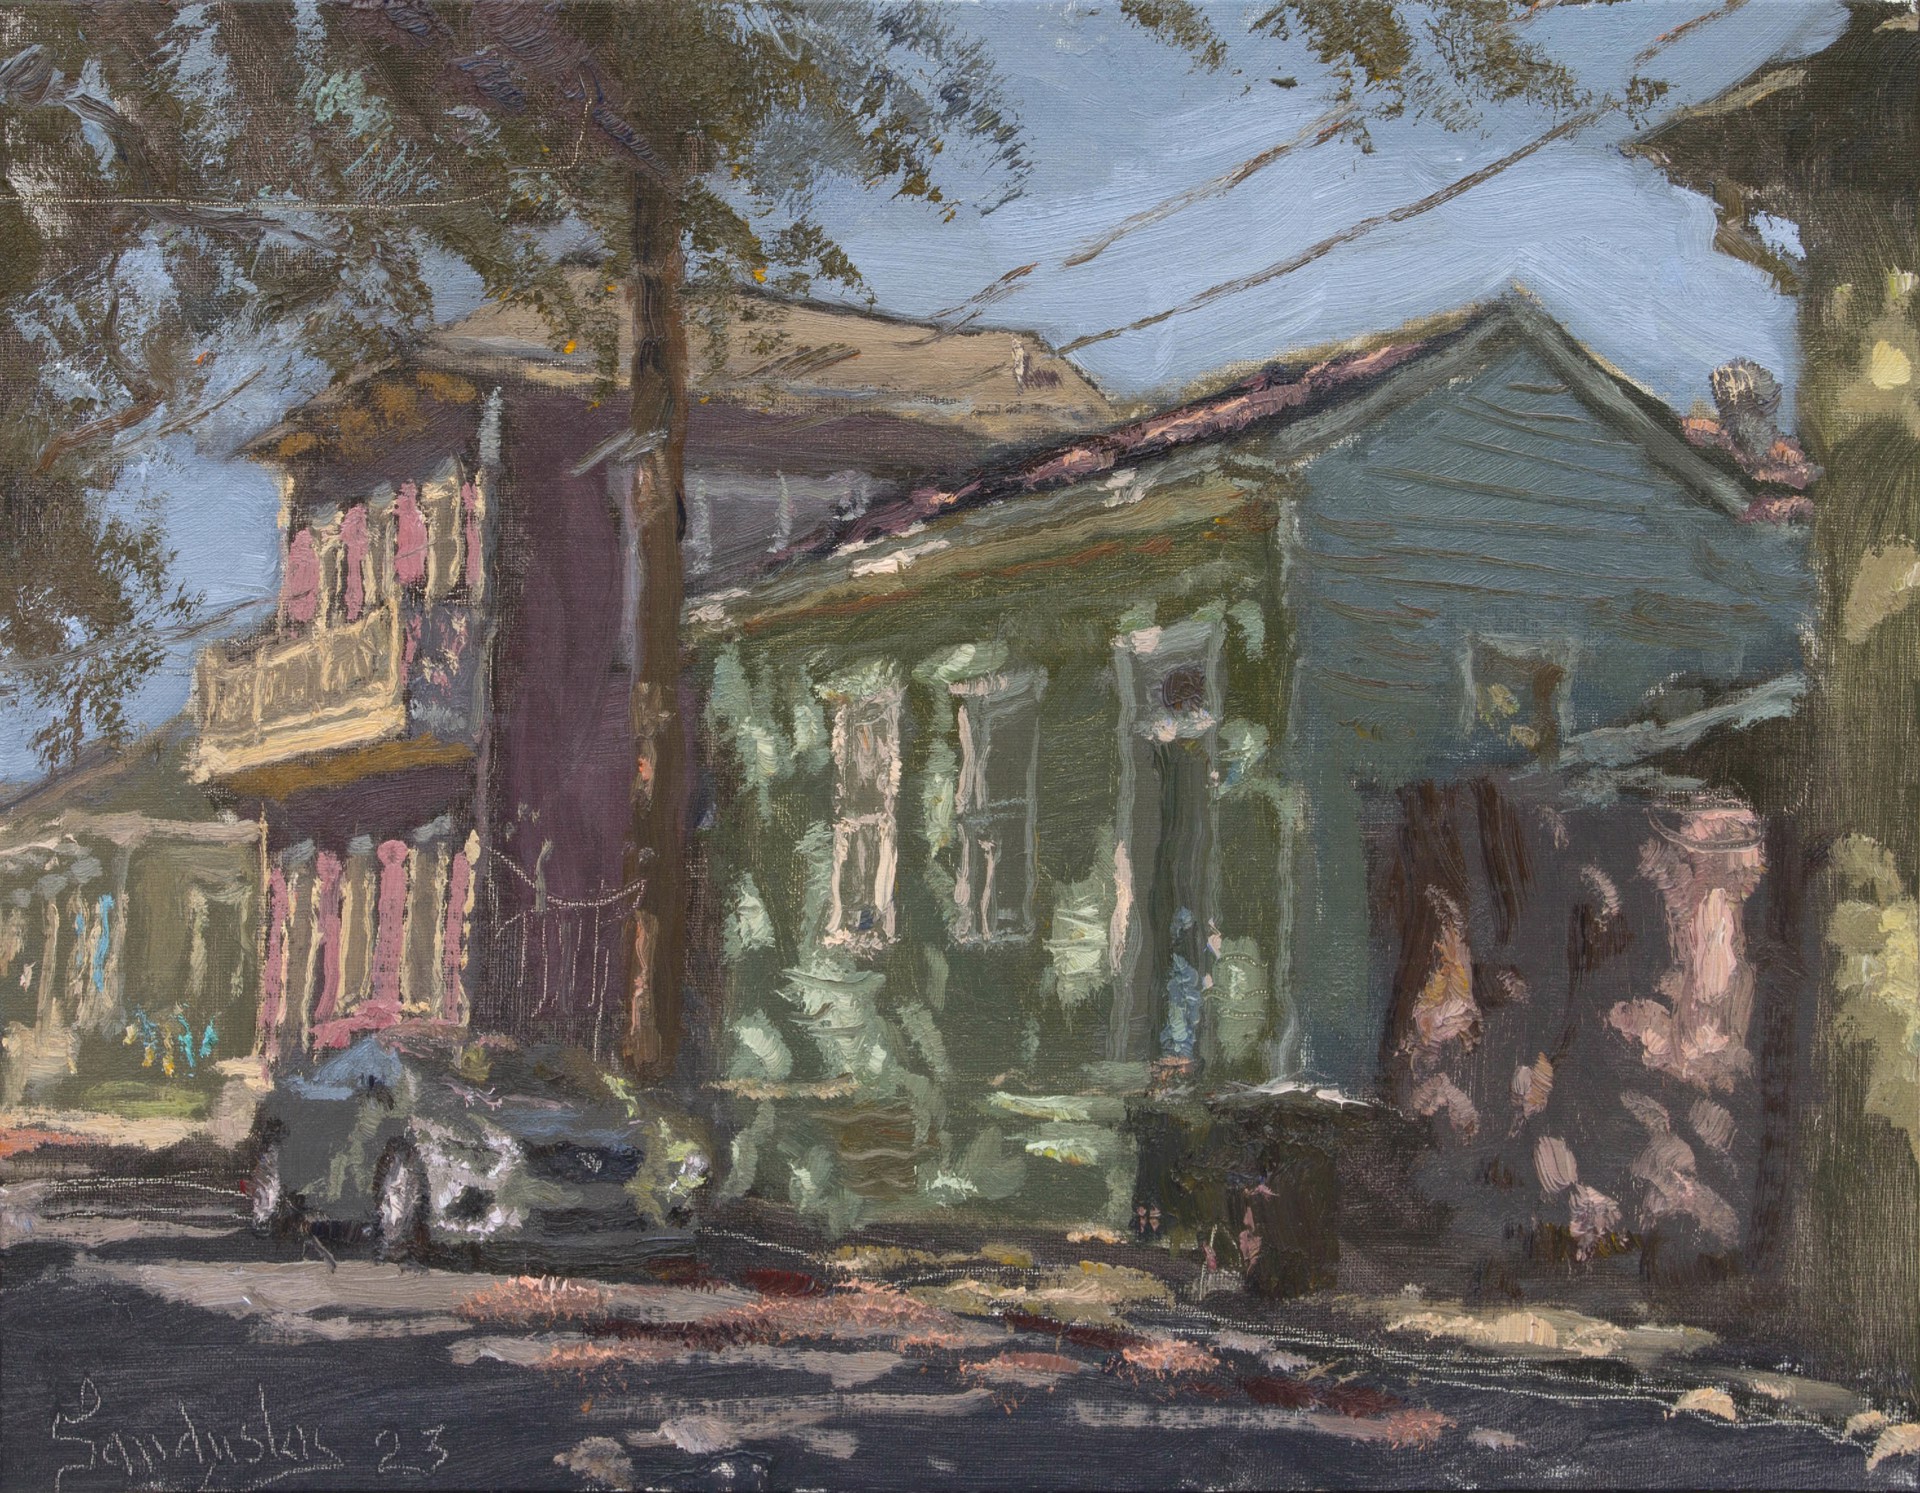 Houses on Laurel Street by Phil Sandusky